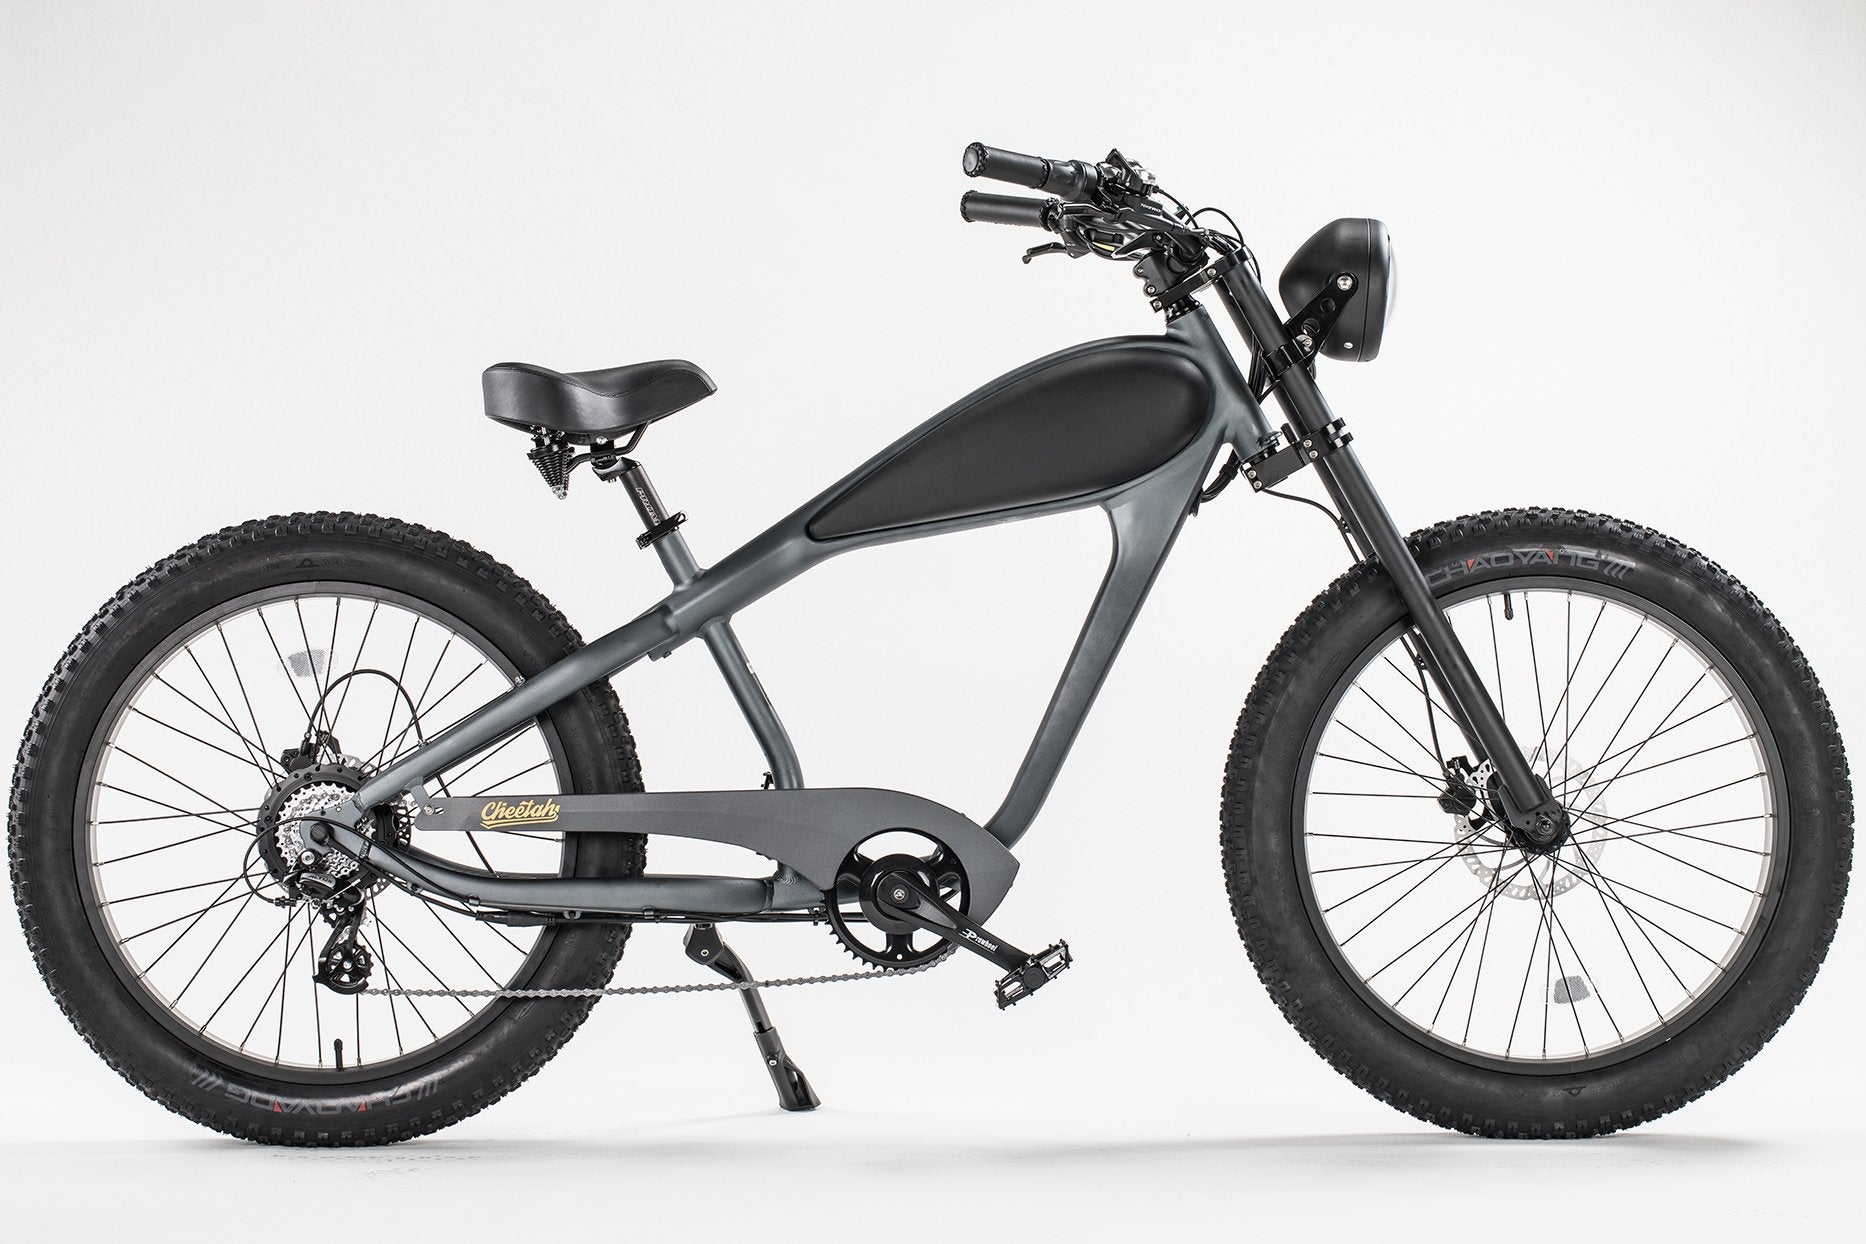 X-Go 36V 10Ah 250W 350W Lithium Li-ion Kettle Battery F Electric Bicycle E-Bike Motor, Aluminum